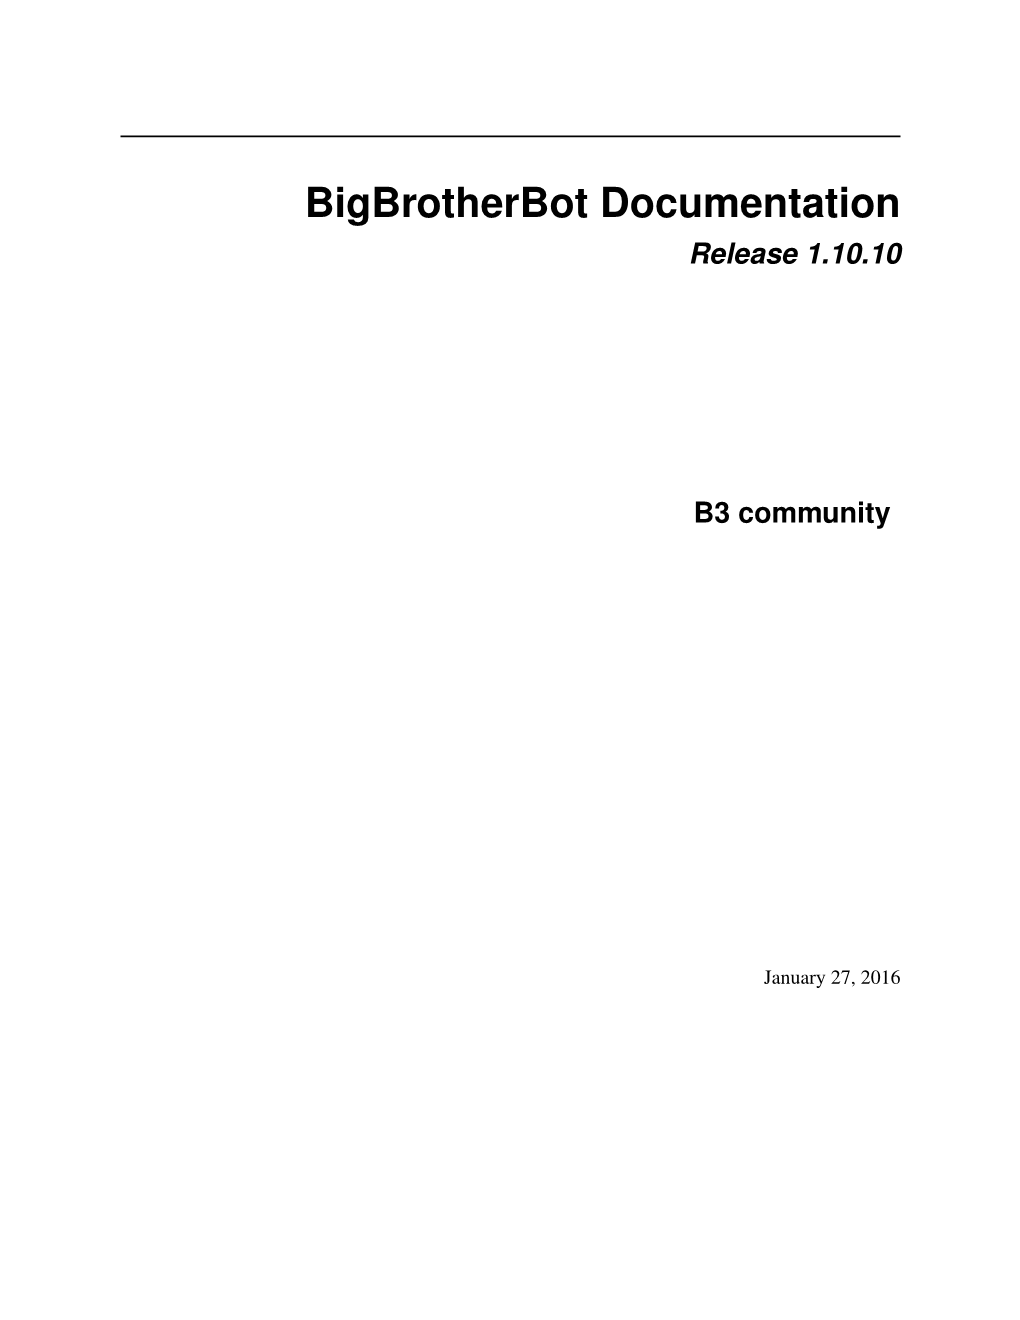 Bigbrotherbot Documentation Release 1.10.10